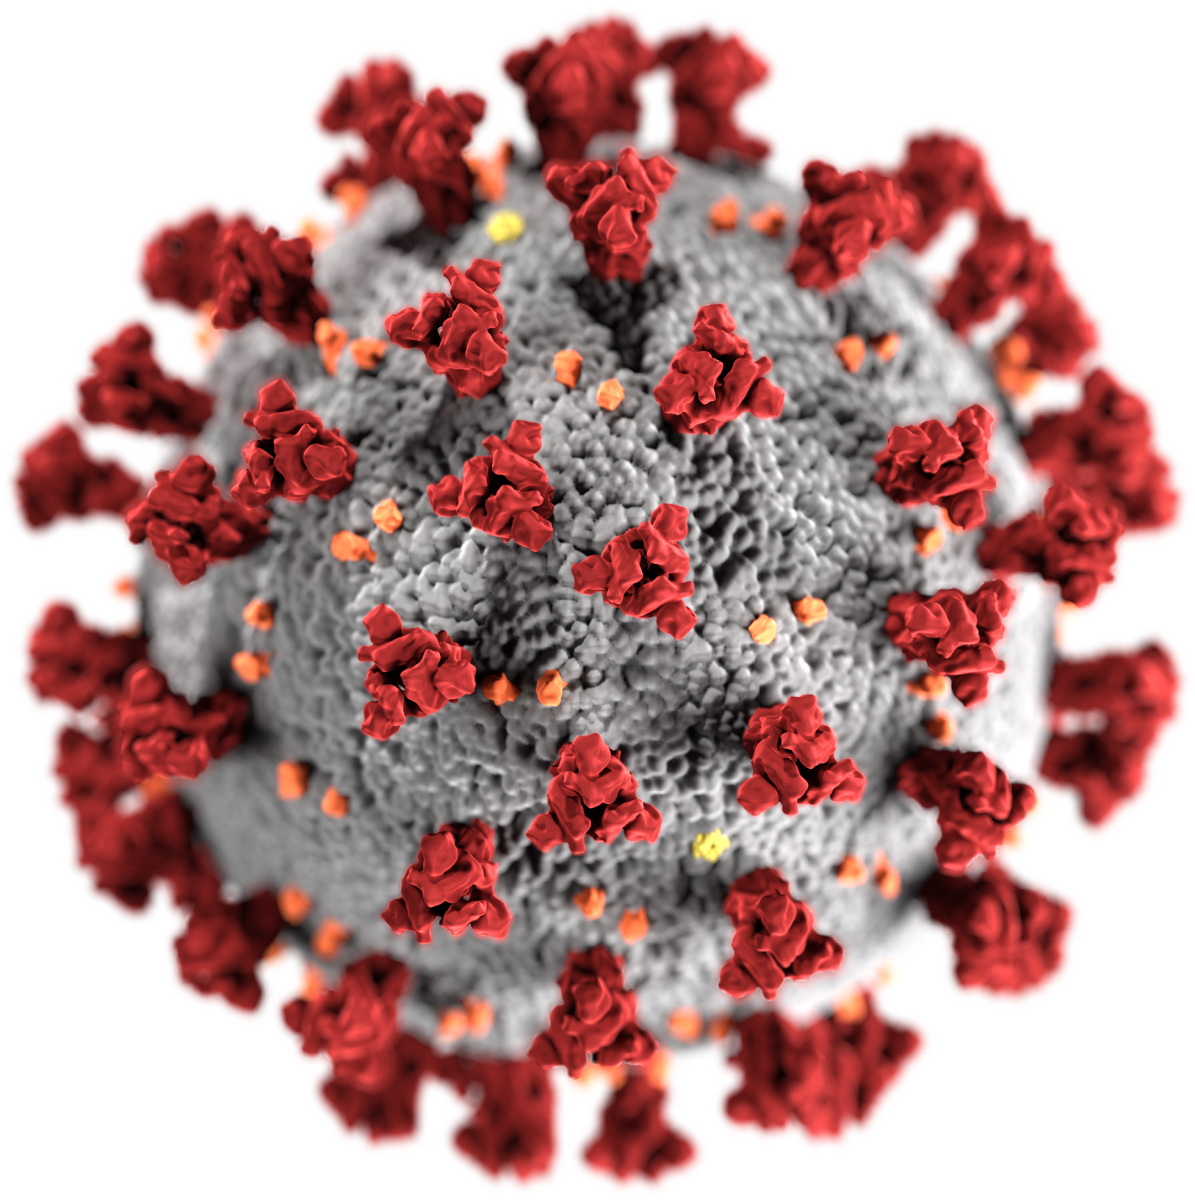 The threat from coronavirus is real